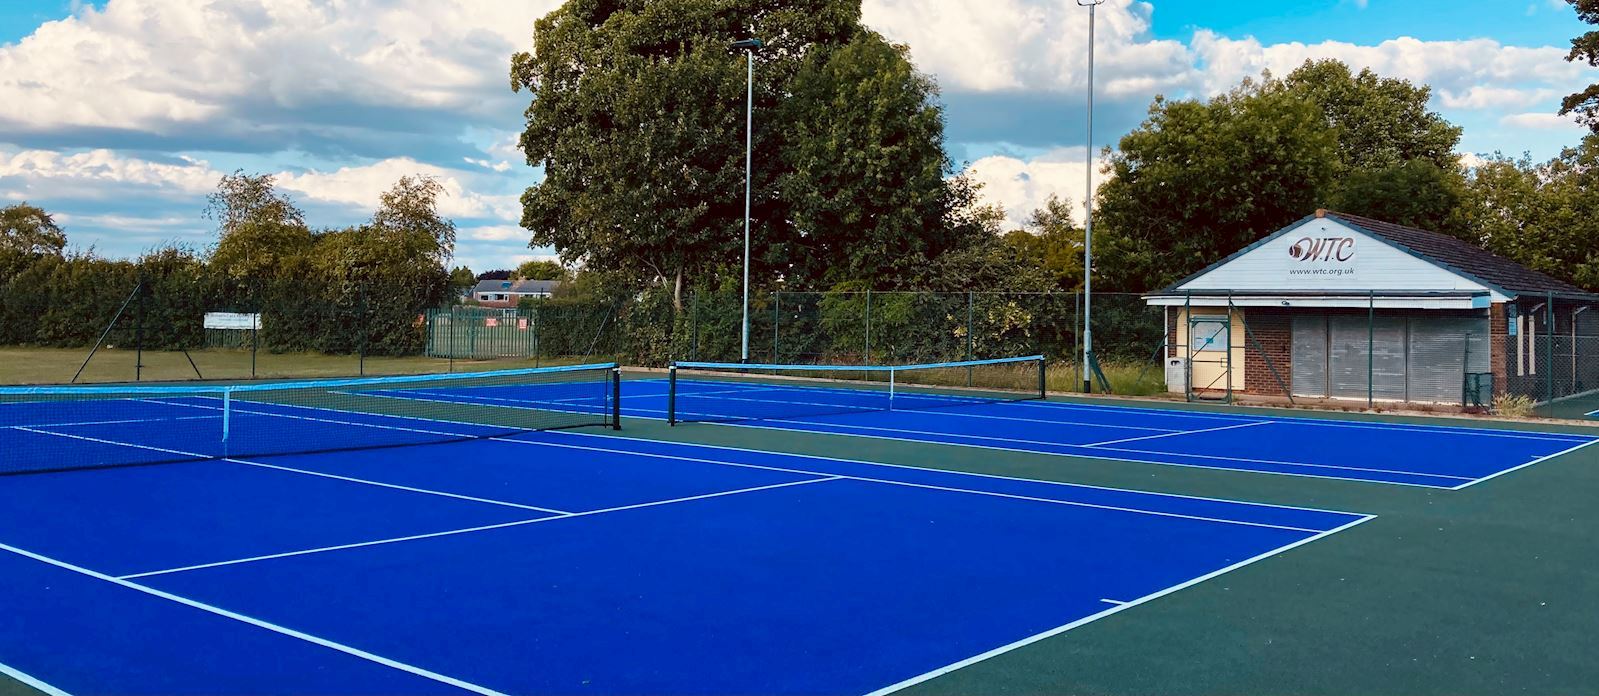 Winterbourne Tennis Club